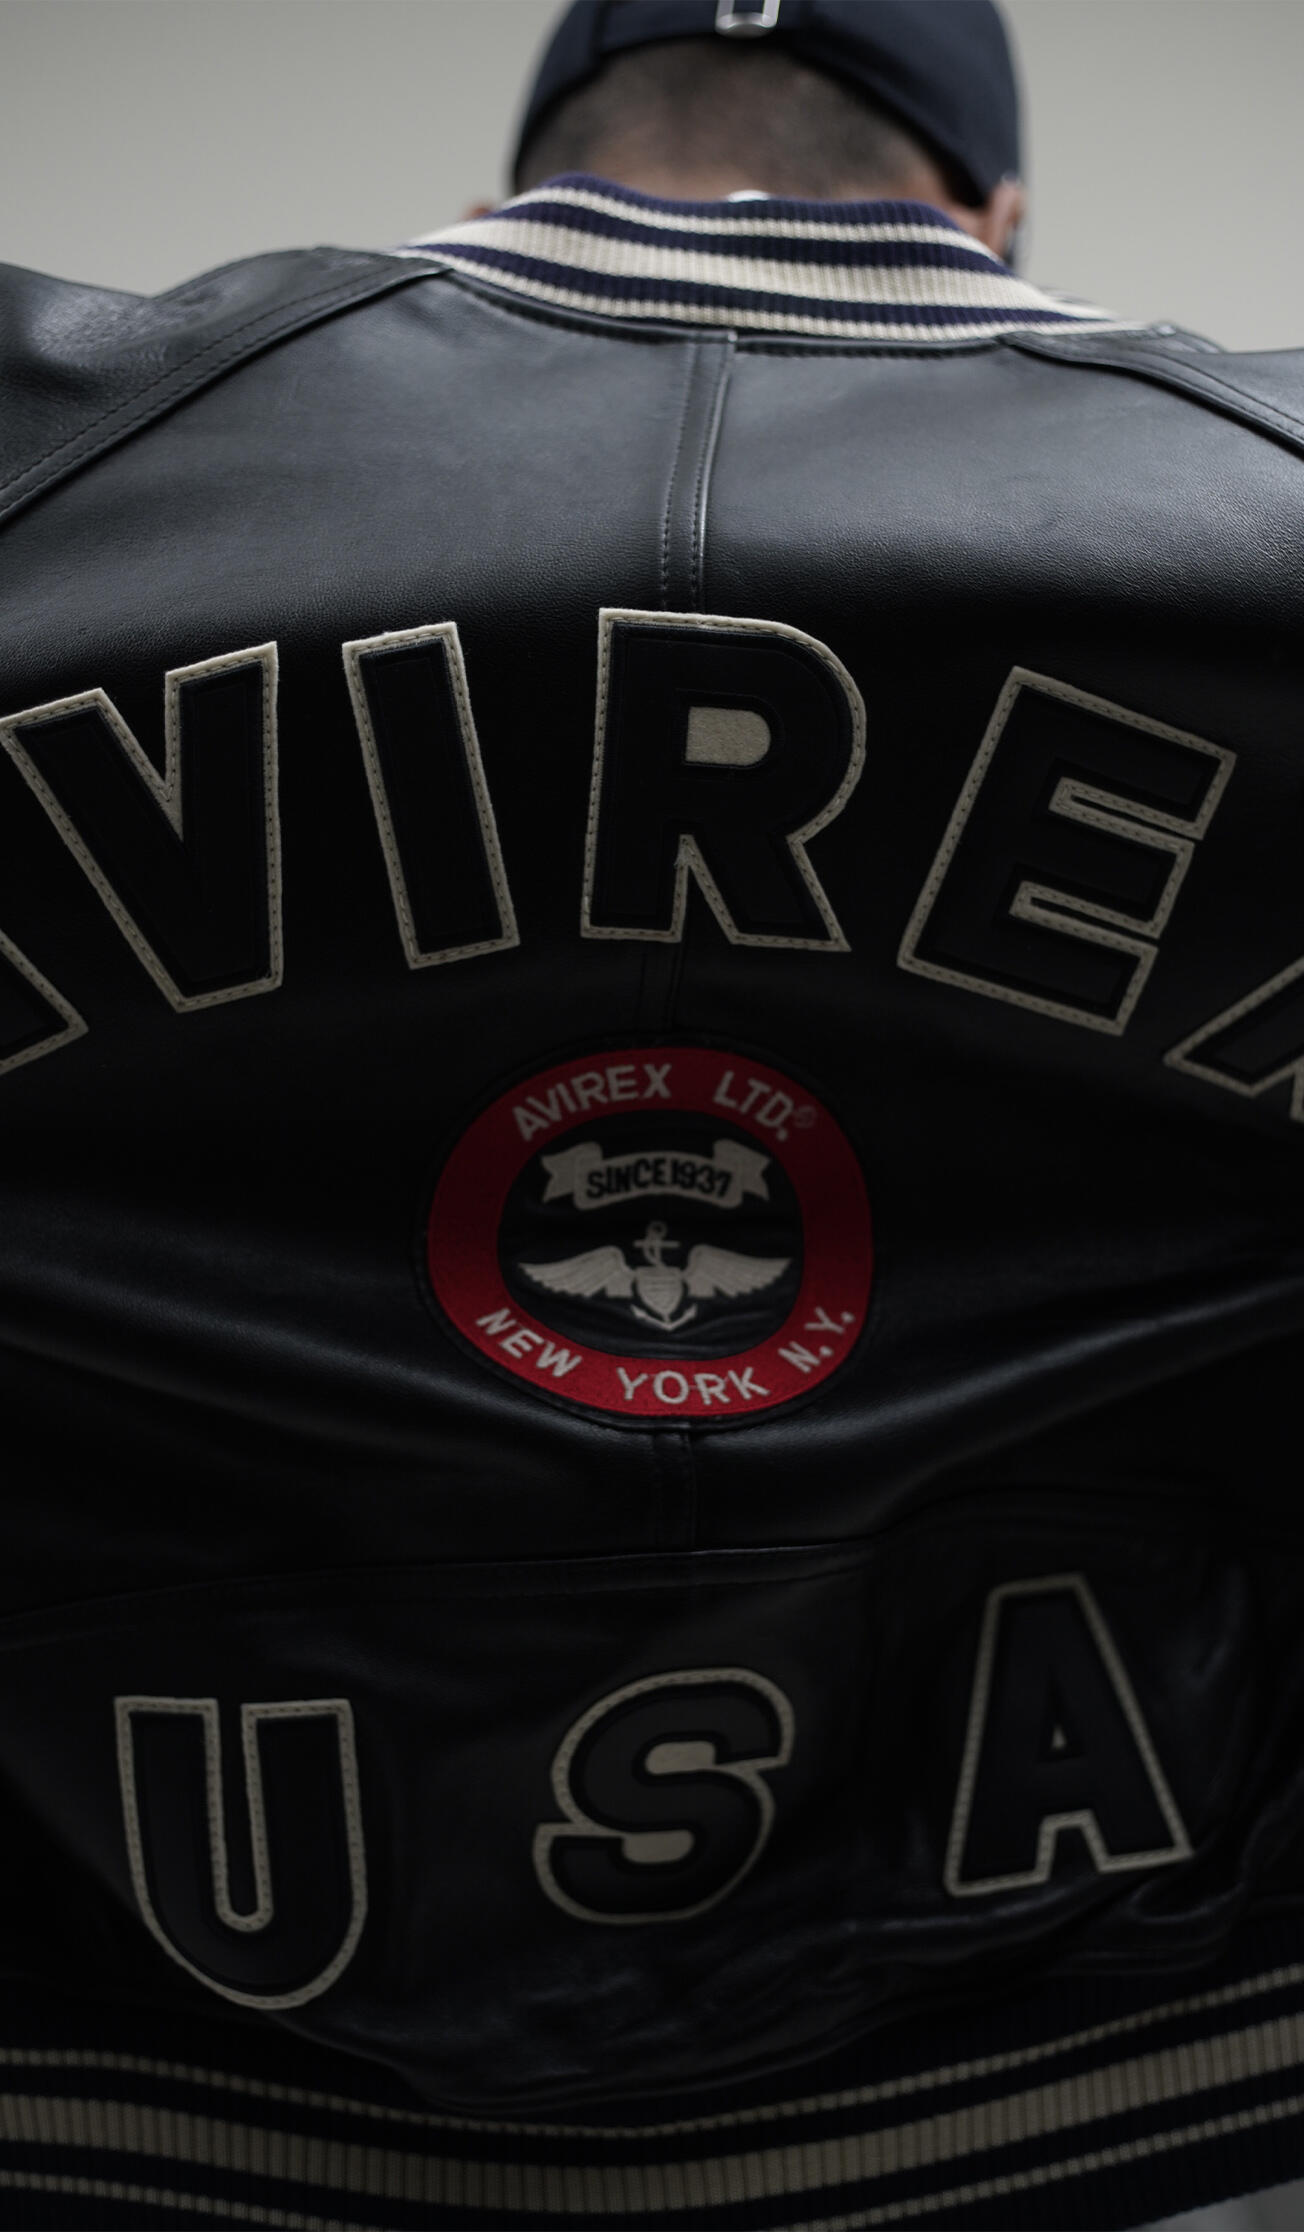 AVIREX Varsity Sport Logo Leather Jacket販売させていただきます